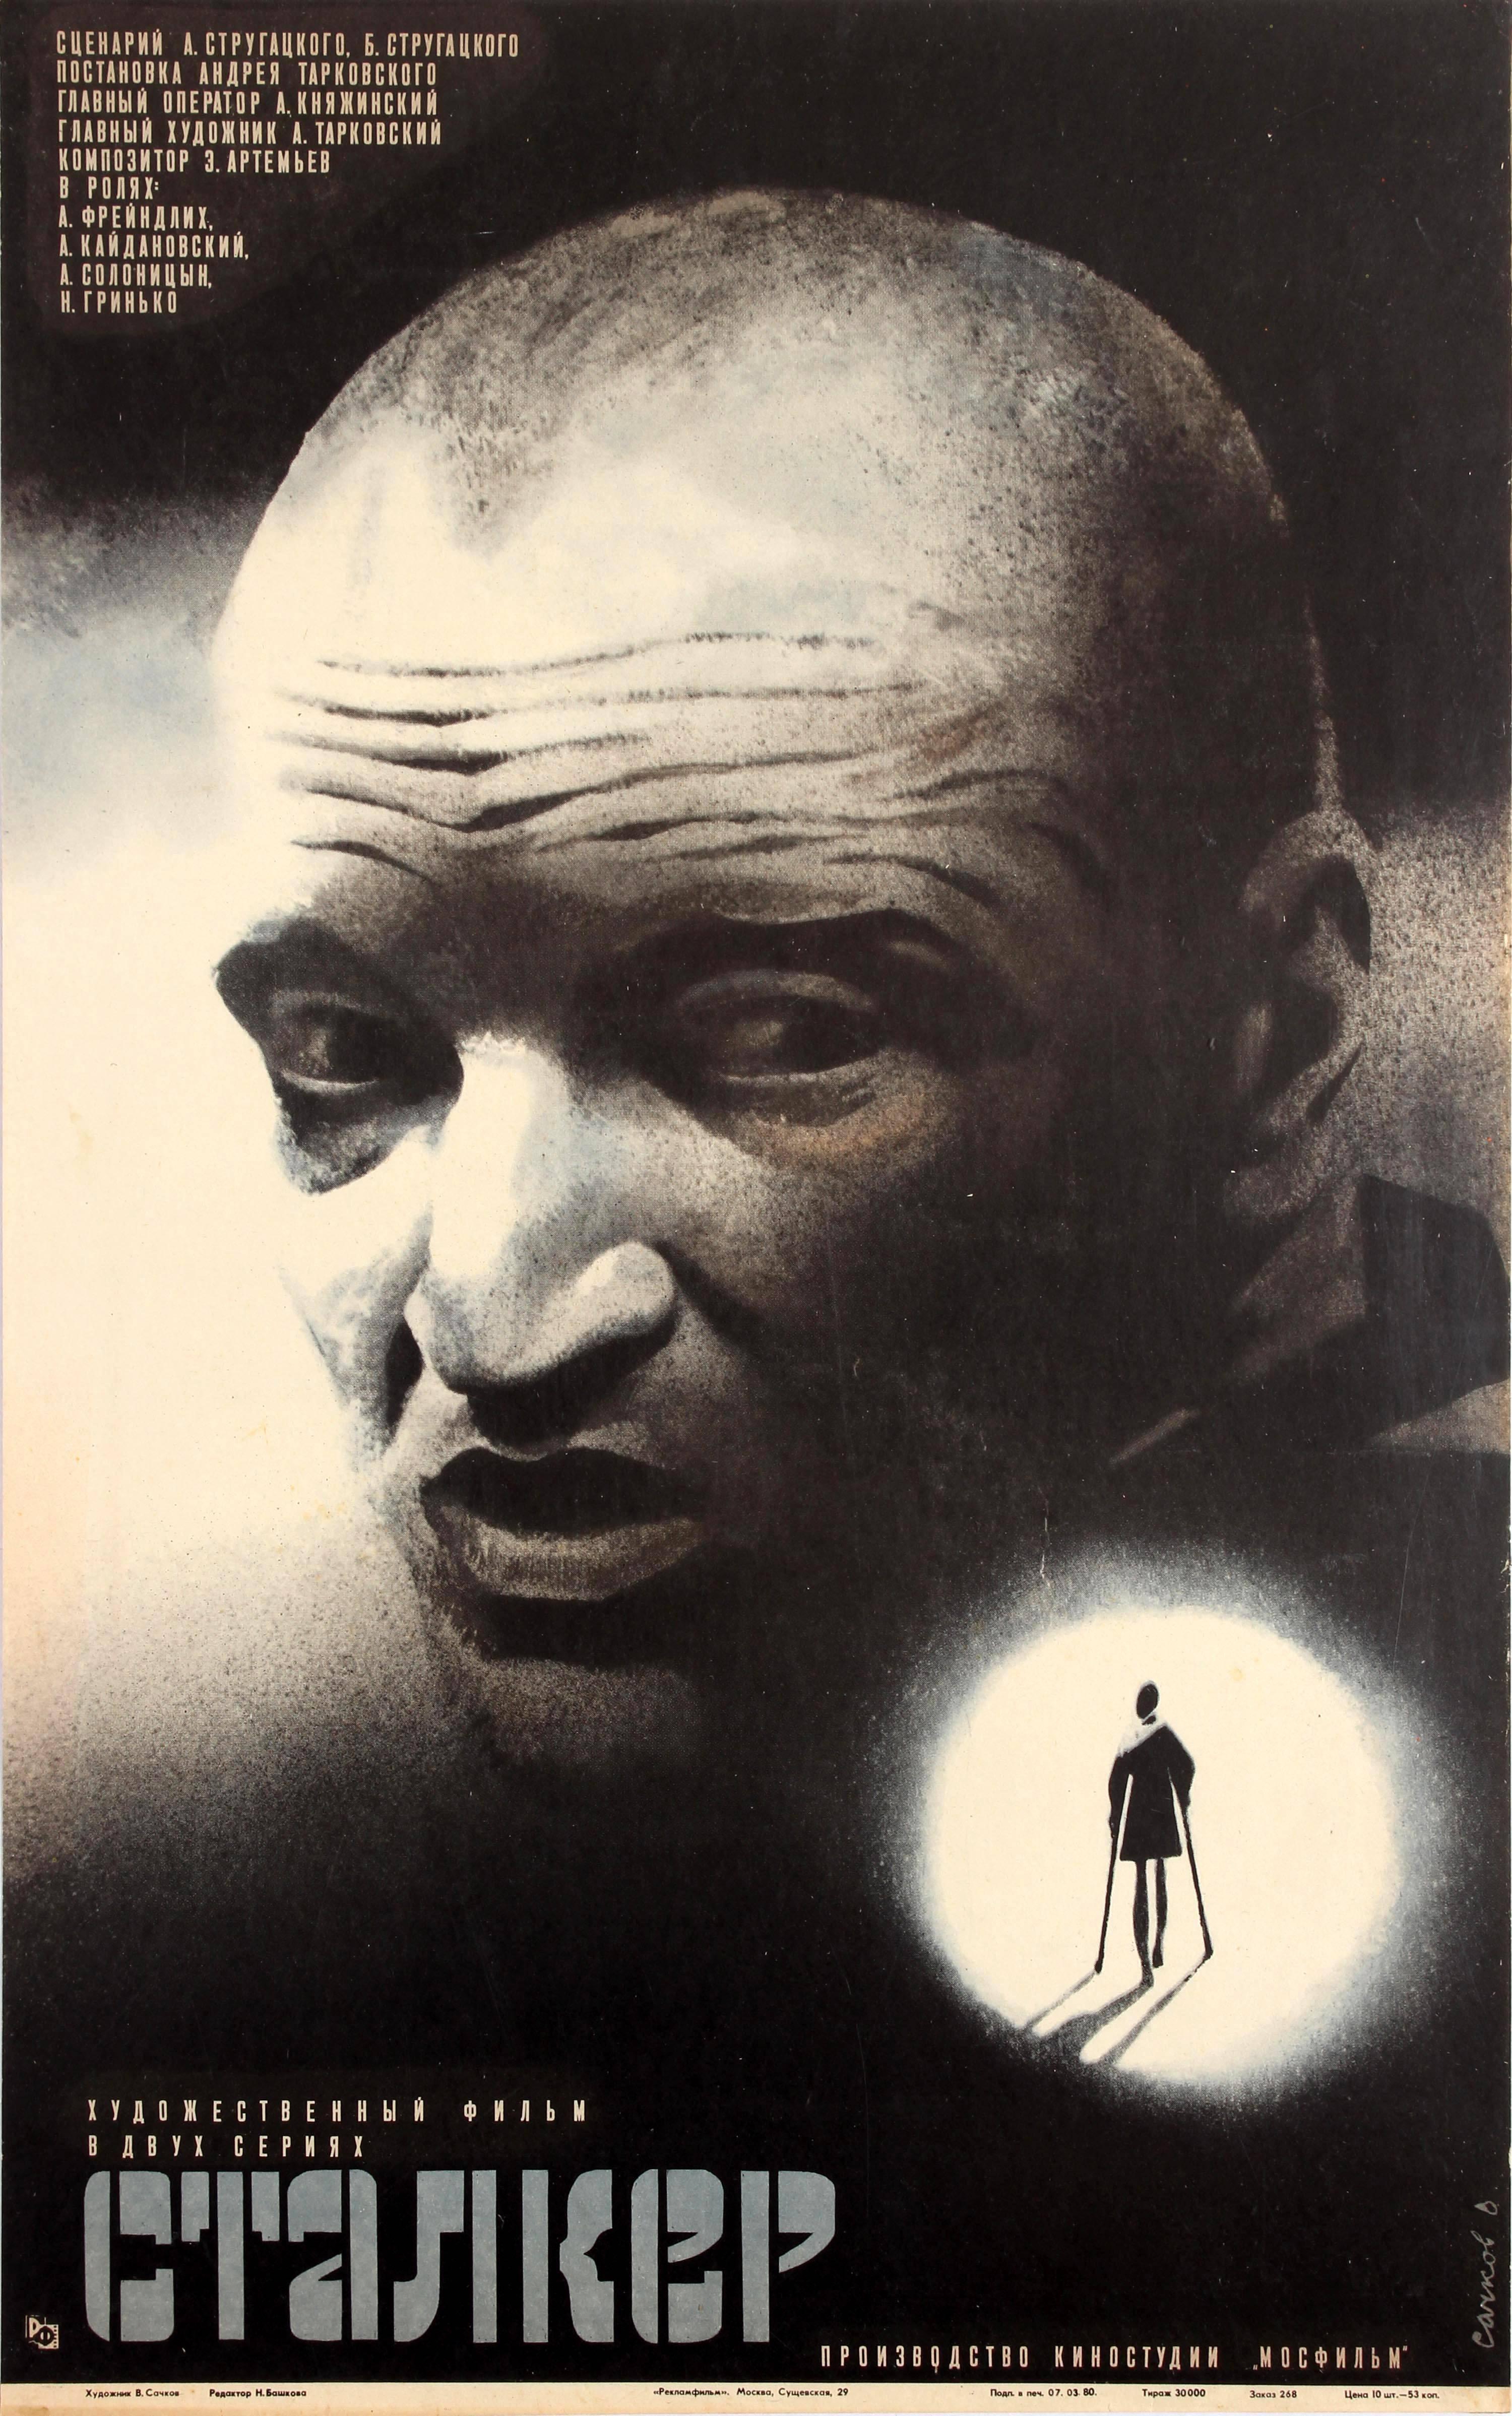 V. Sachkov Print - Original Vintage Soviet Movie Poster For A Science Fiction Art Film - Stalker